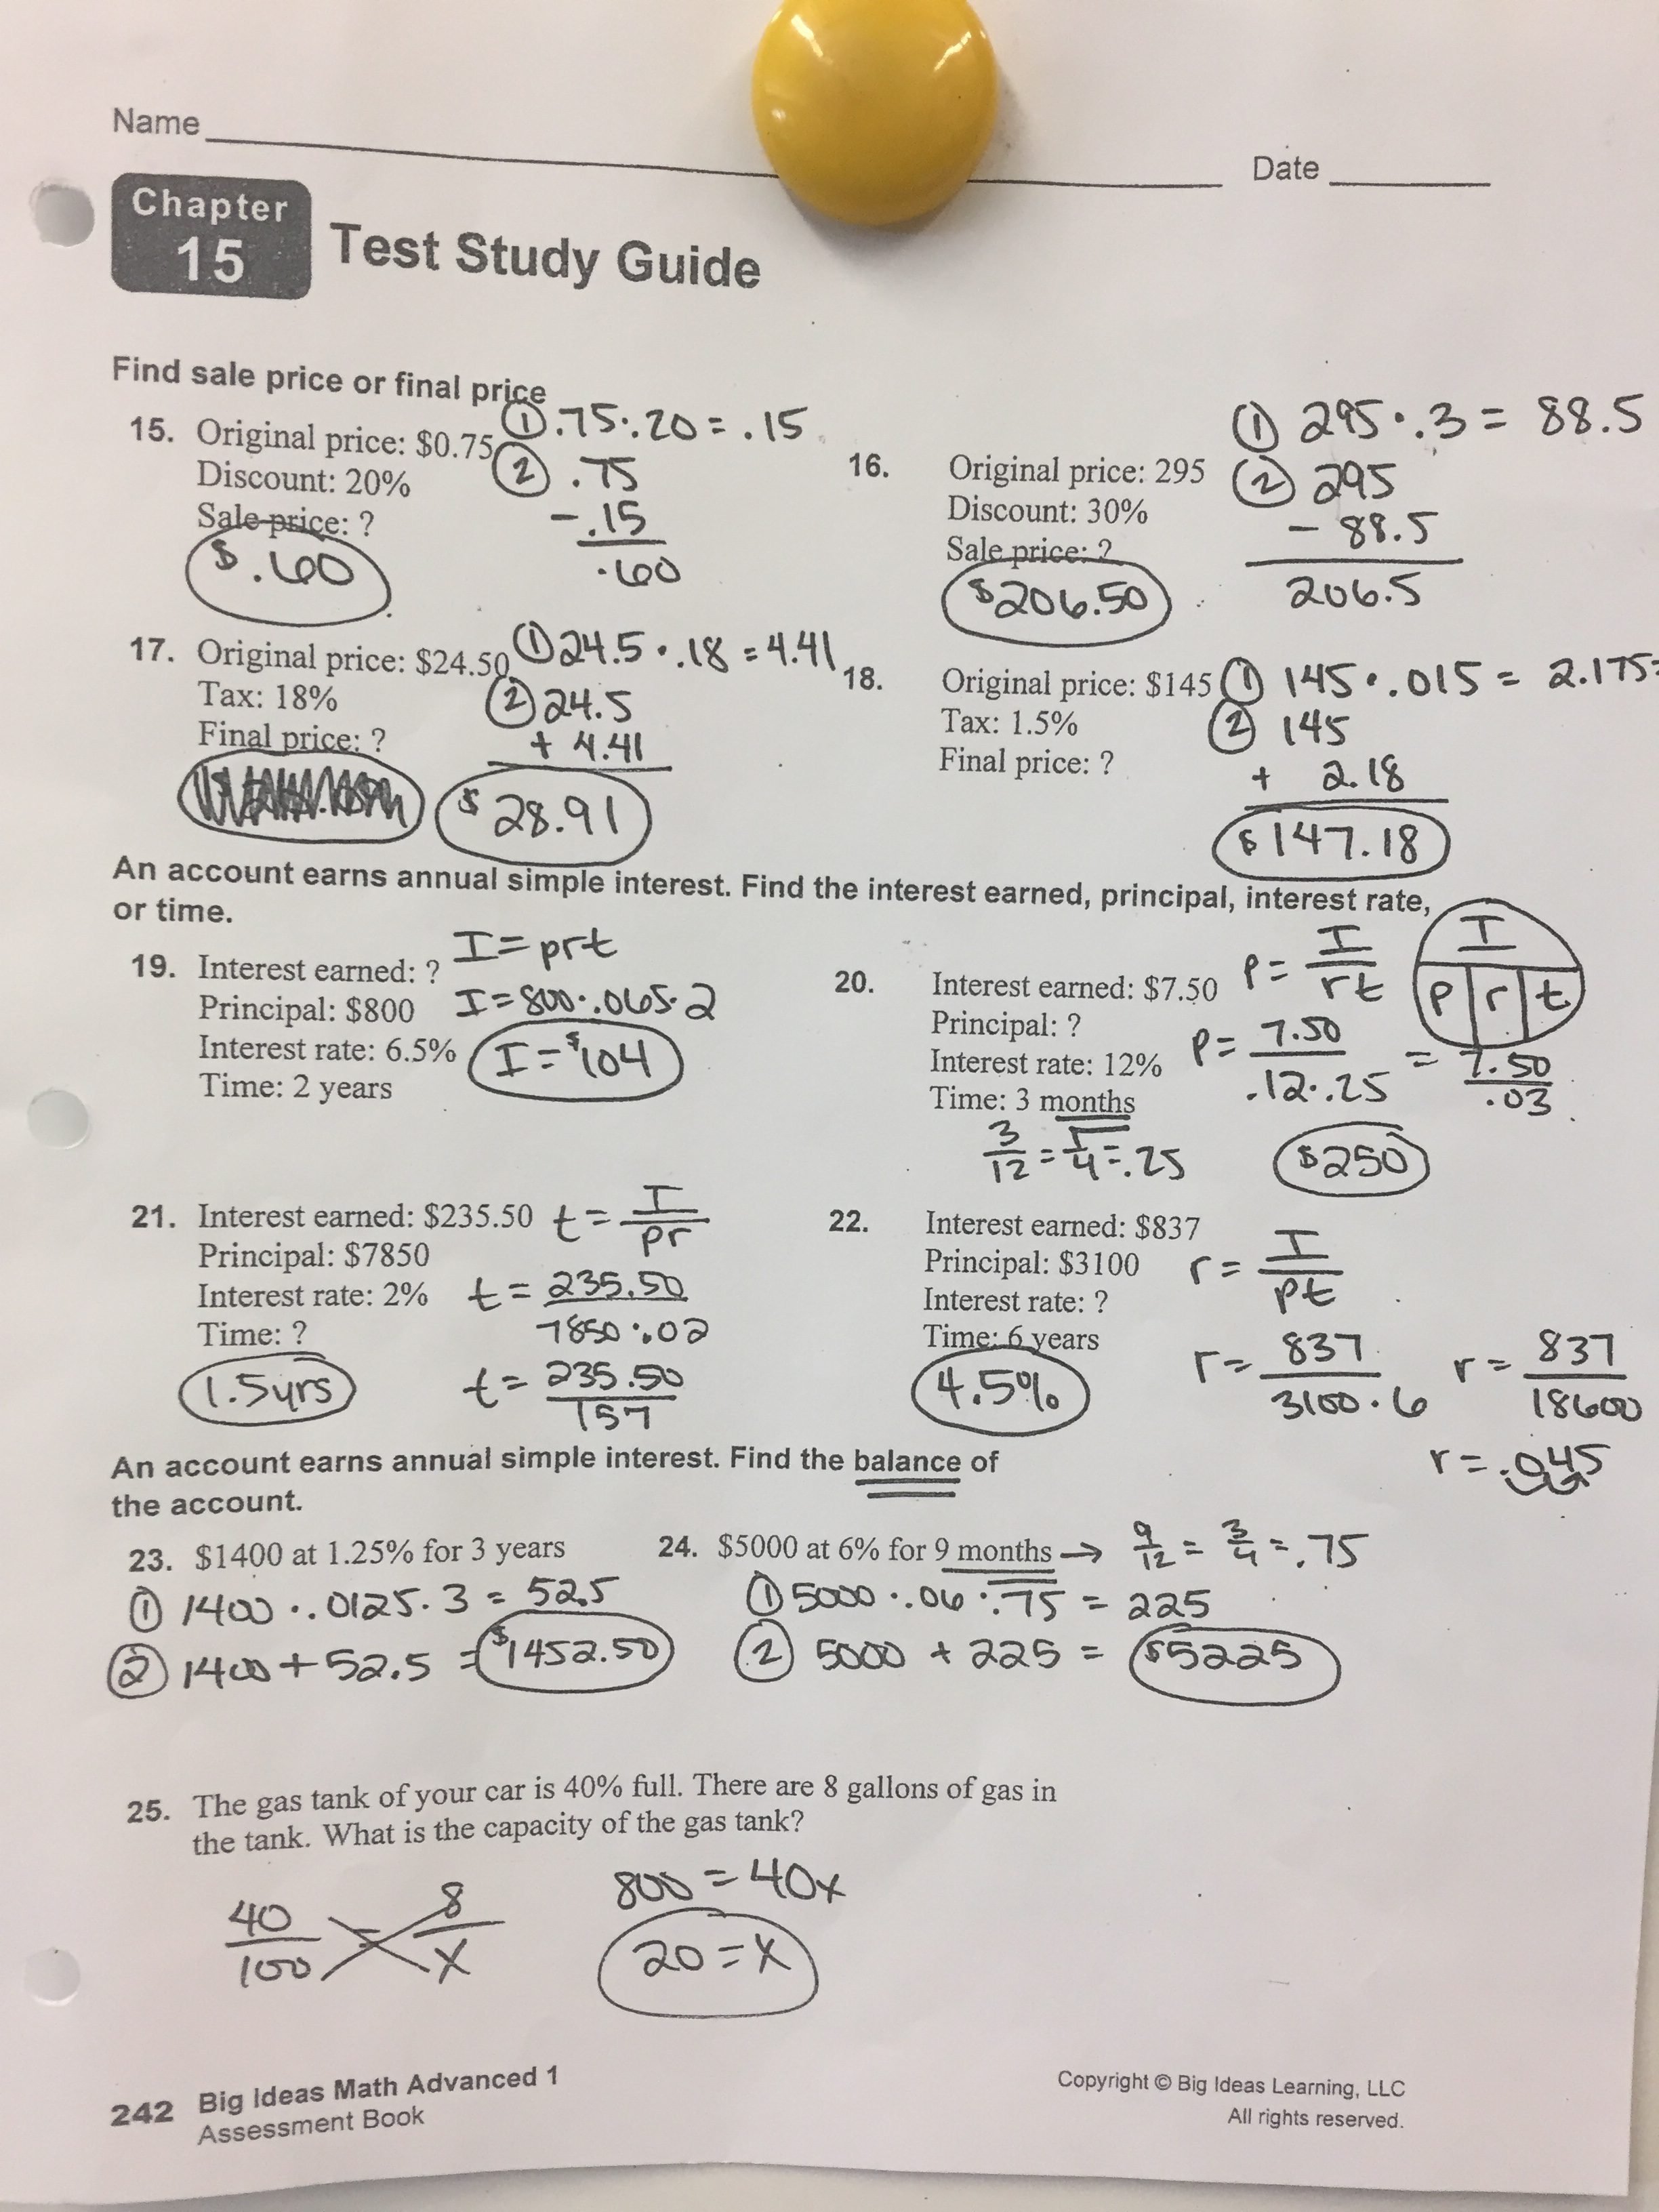 10 Unique Big Ideas Math Answer Key mrs gillespie 6th grade math page 2 1 2022